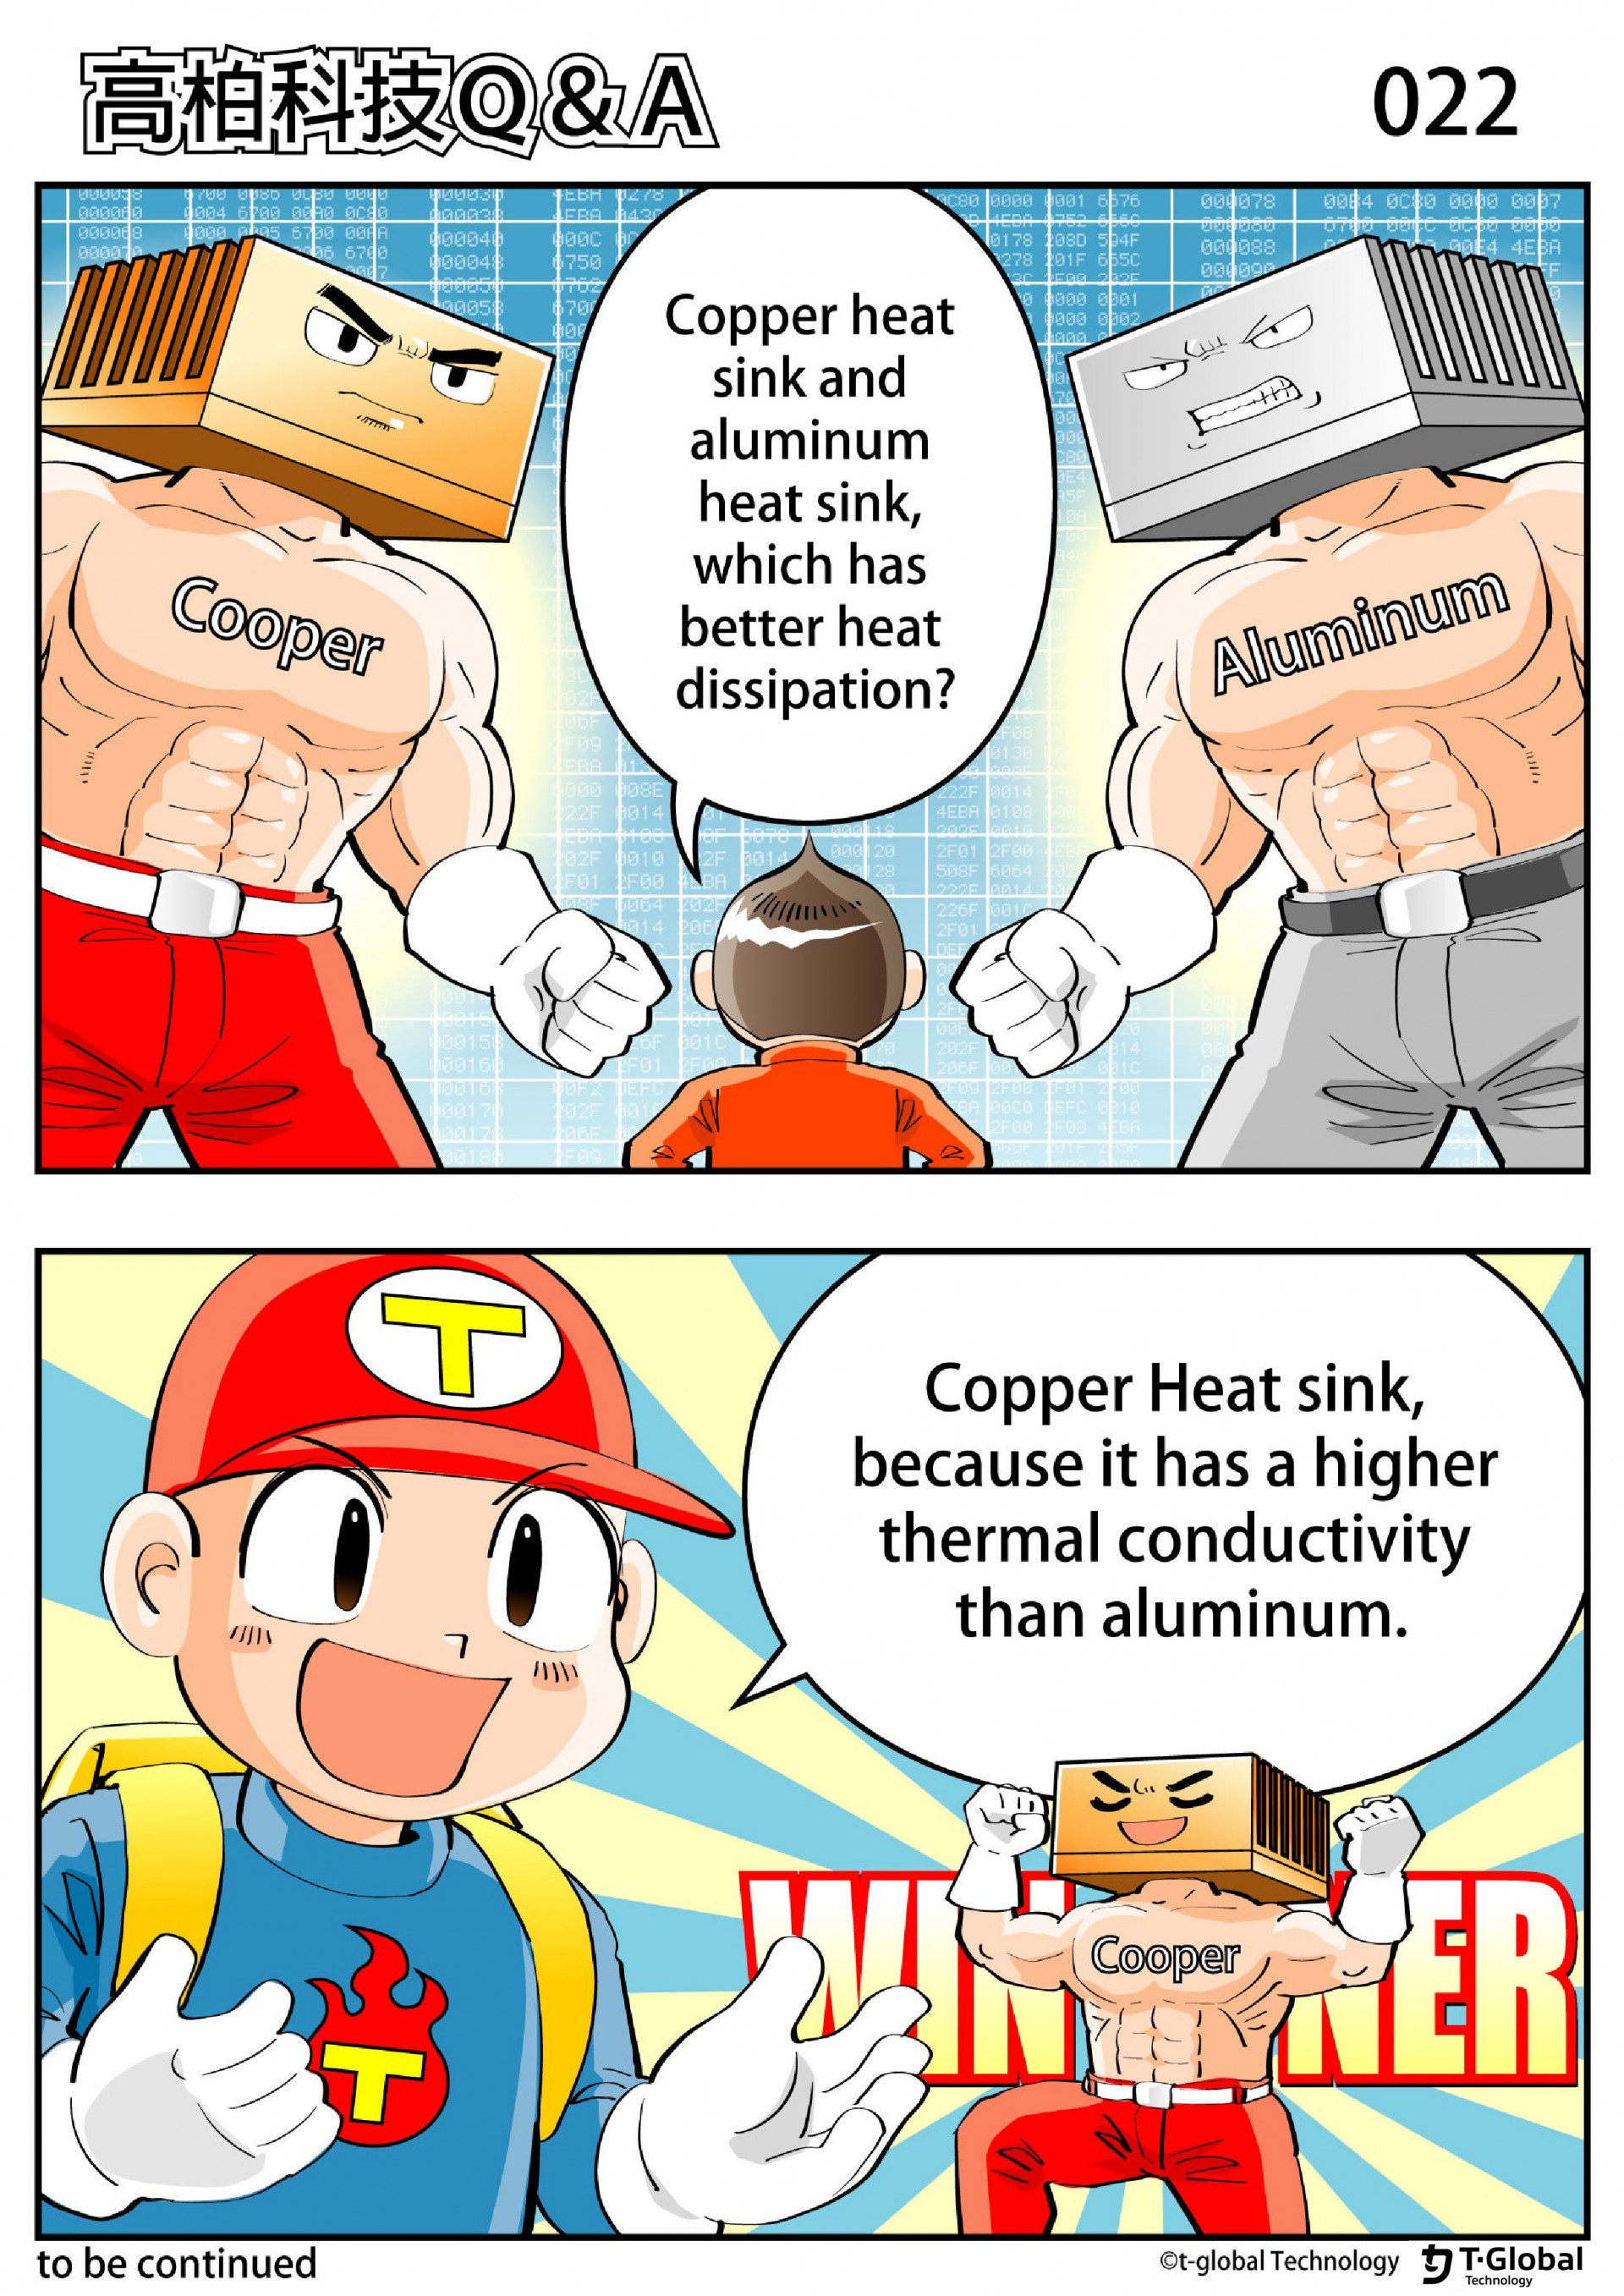 heat-dissipation-between-aluminum-and-copper-heat-